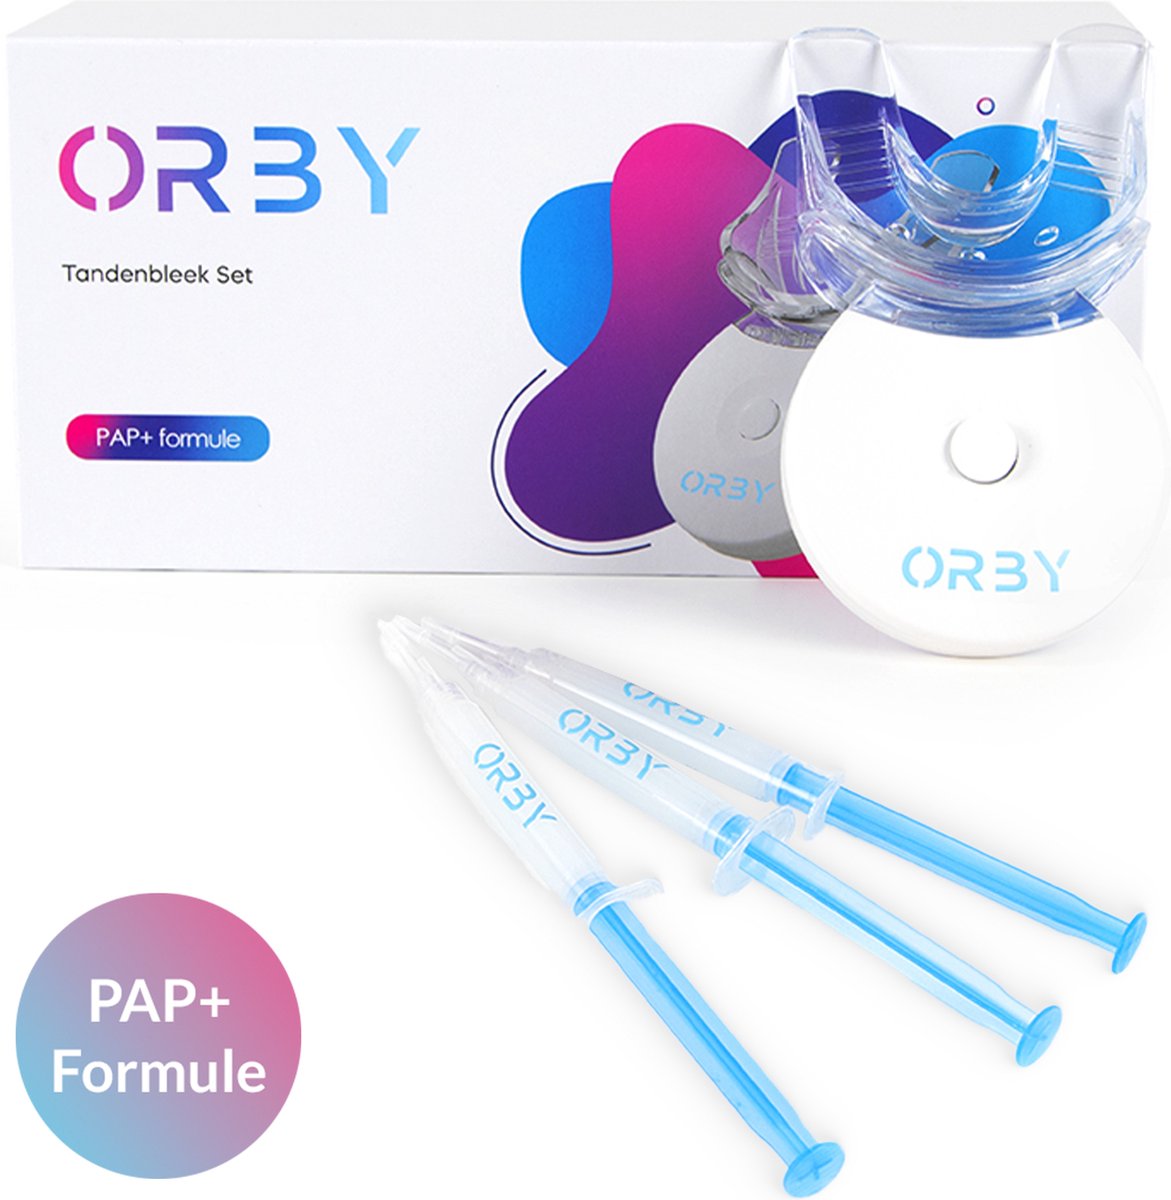 Orby® Tandenbleekset - PAP+ Formule - 100% Peroxidevrij - Tanden bleken - Tandenblekers - Witte tanden